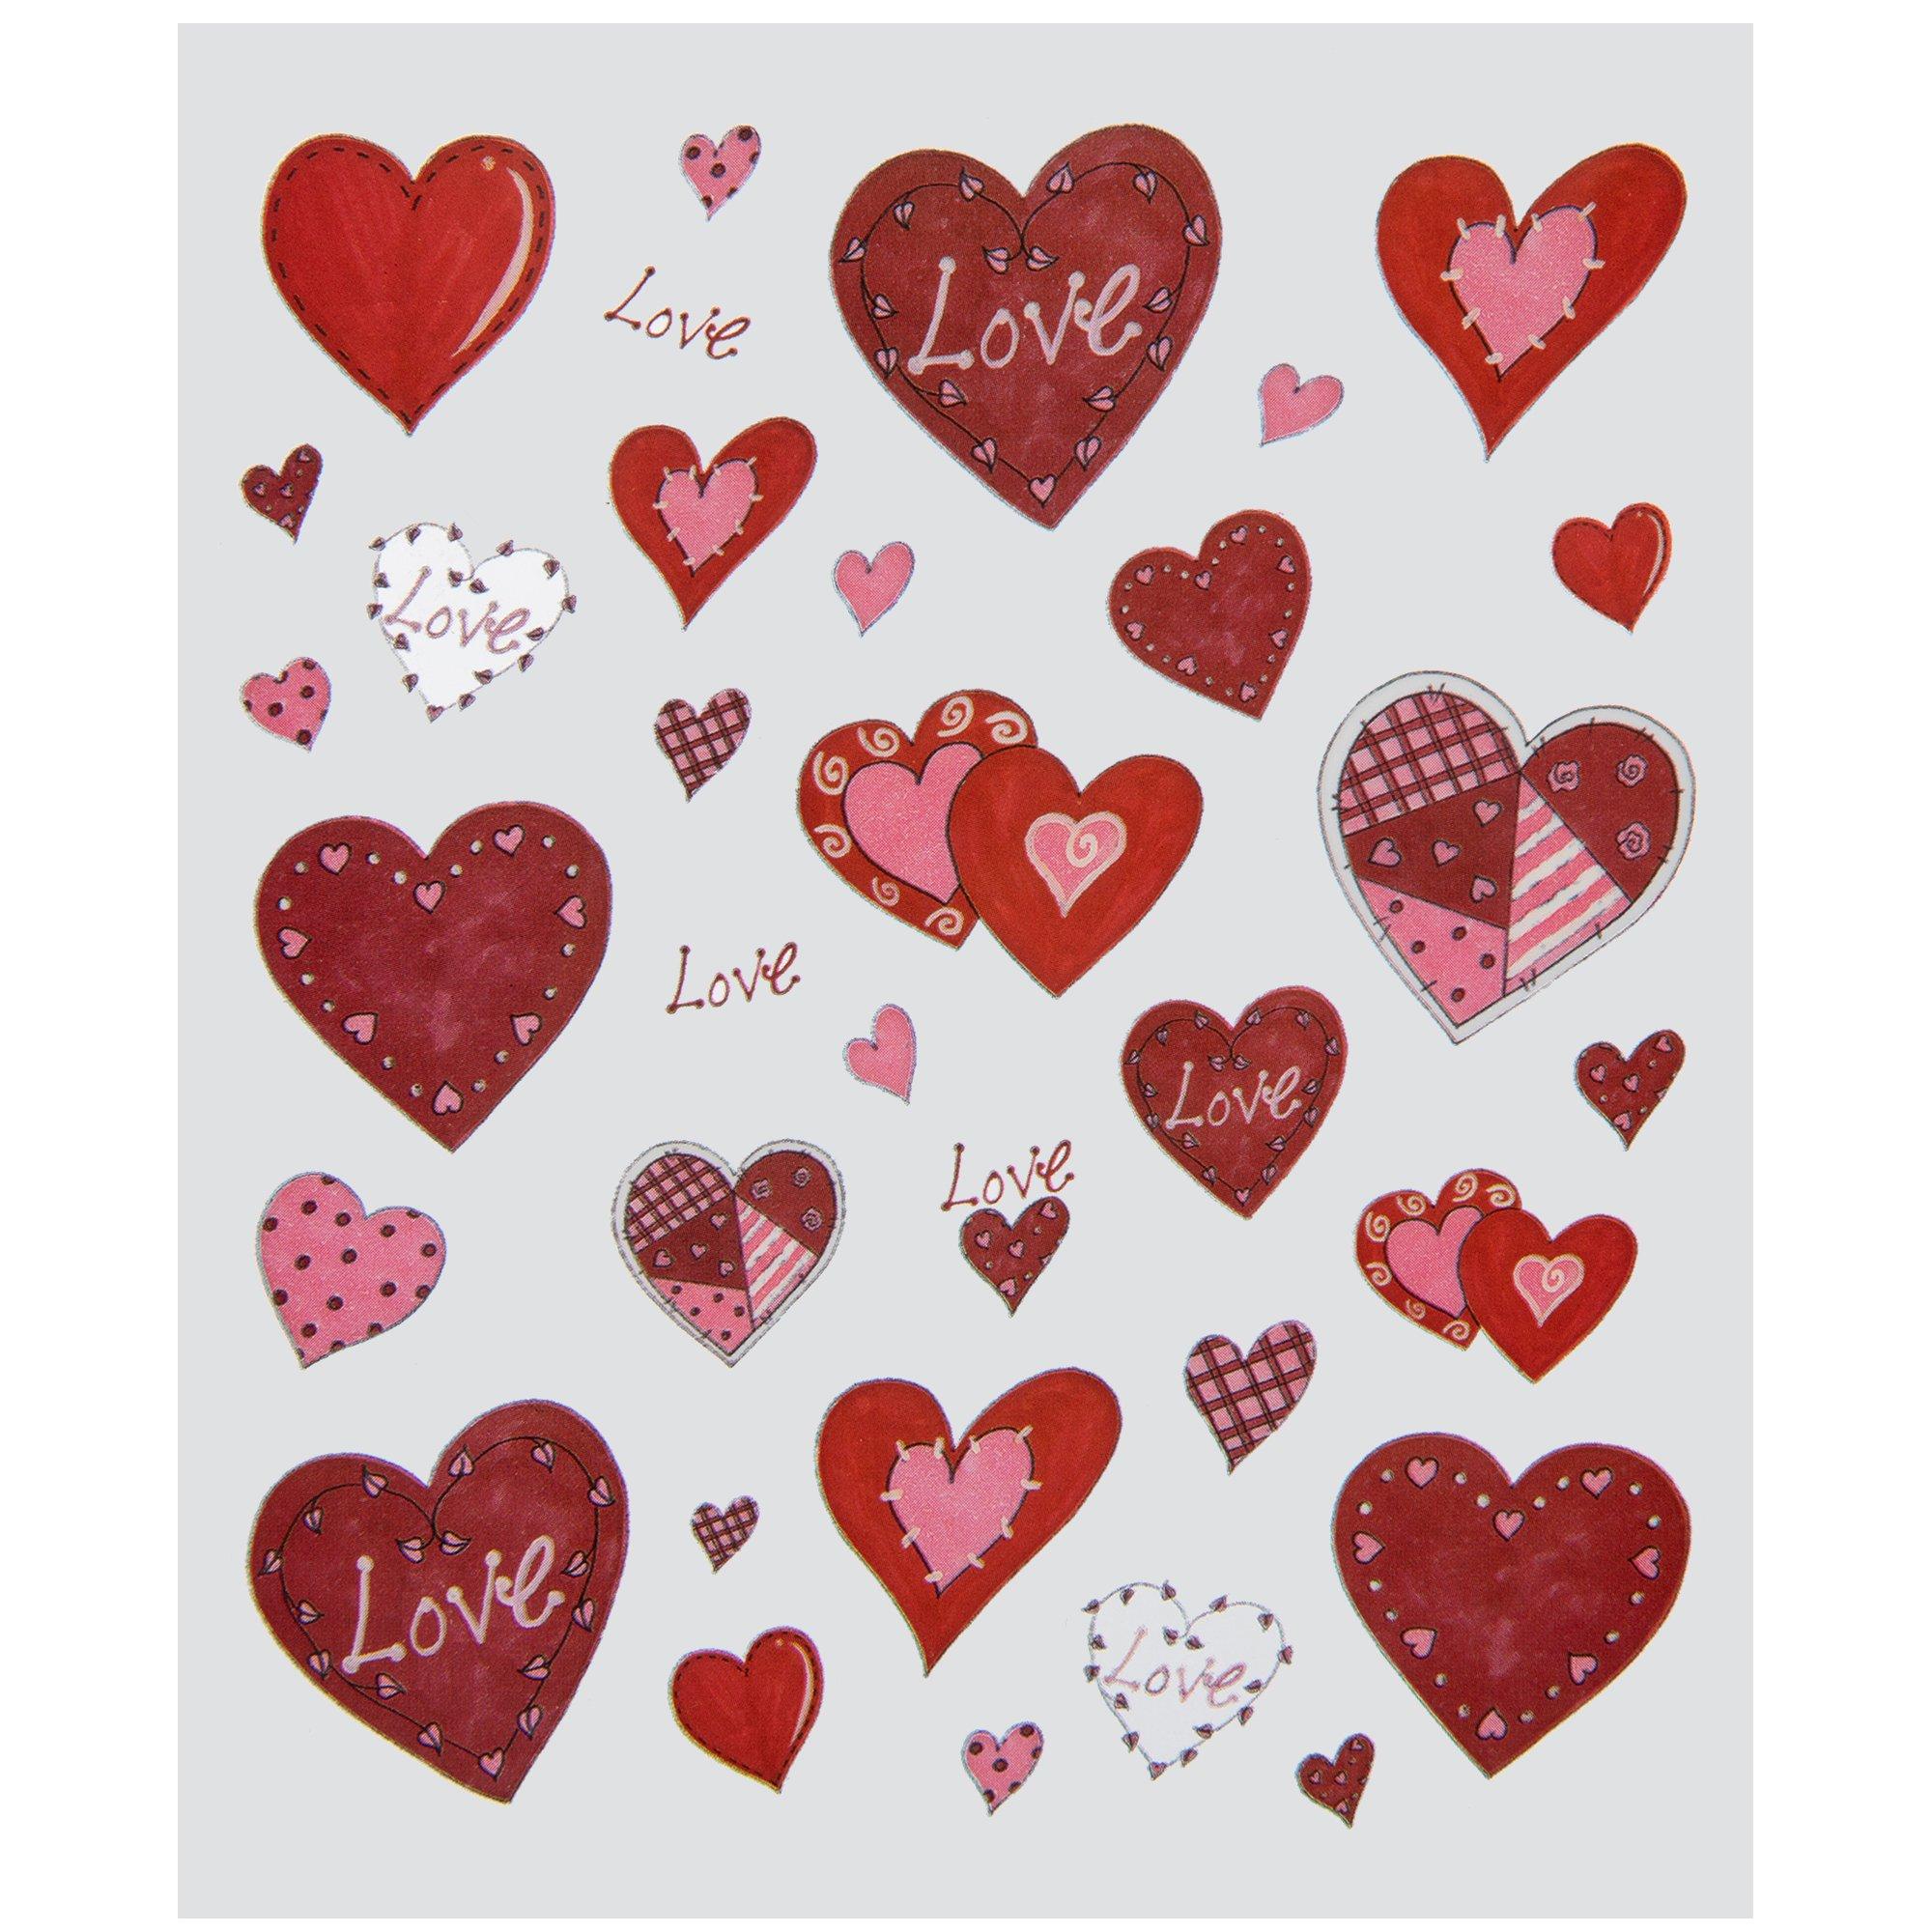 Love Hearts Sticker Sheet Valentines Day Heart Stickers Pink and Red Heart  Stickers Cute Heart Sticker 